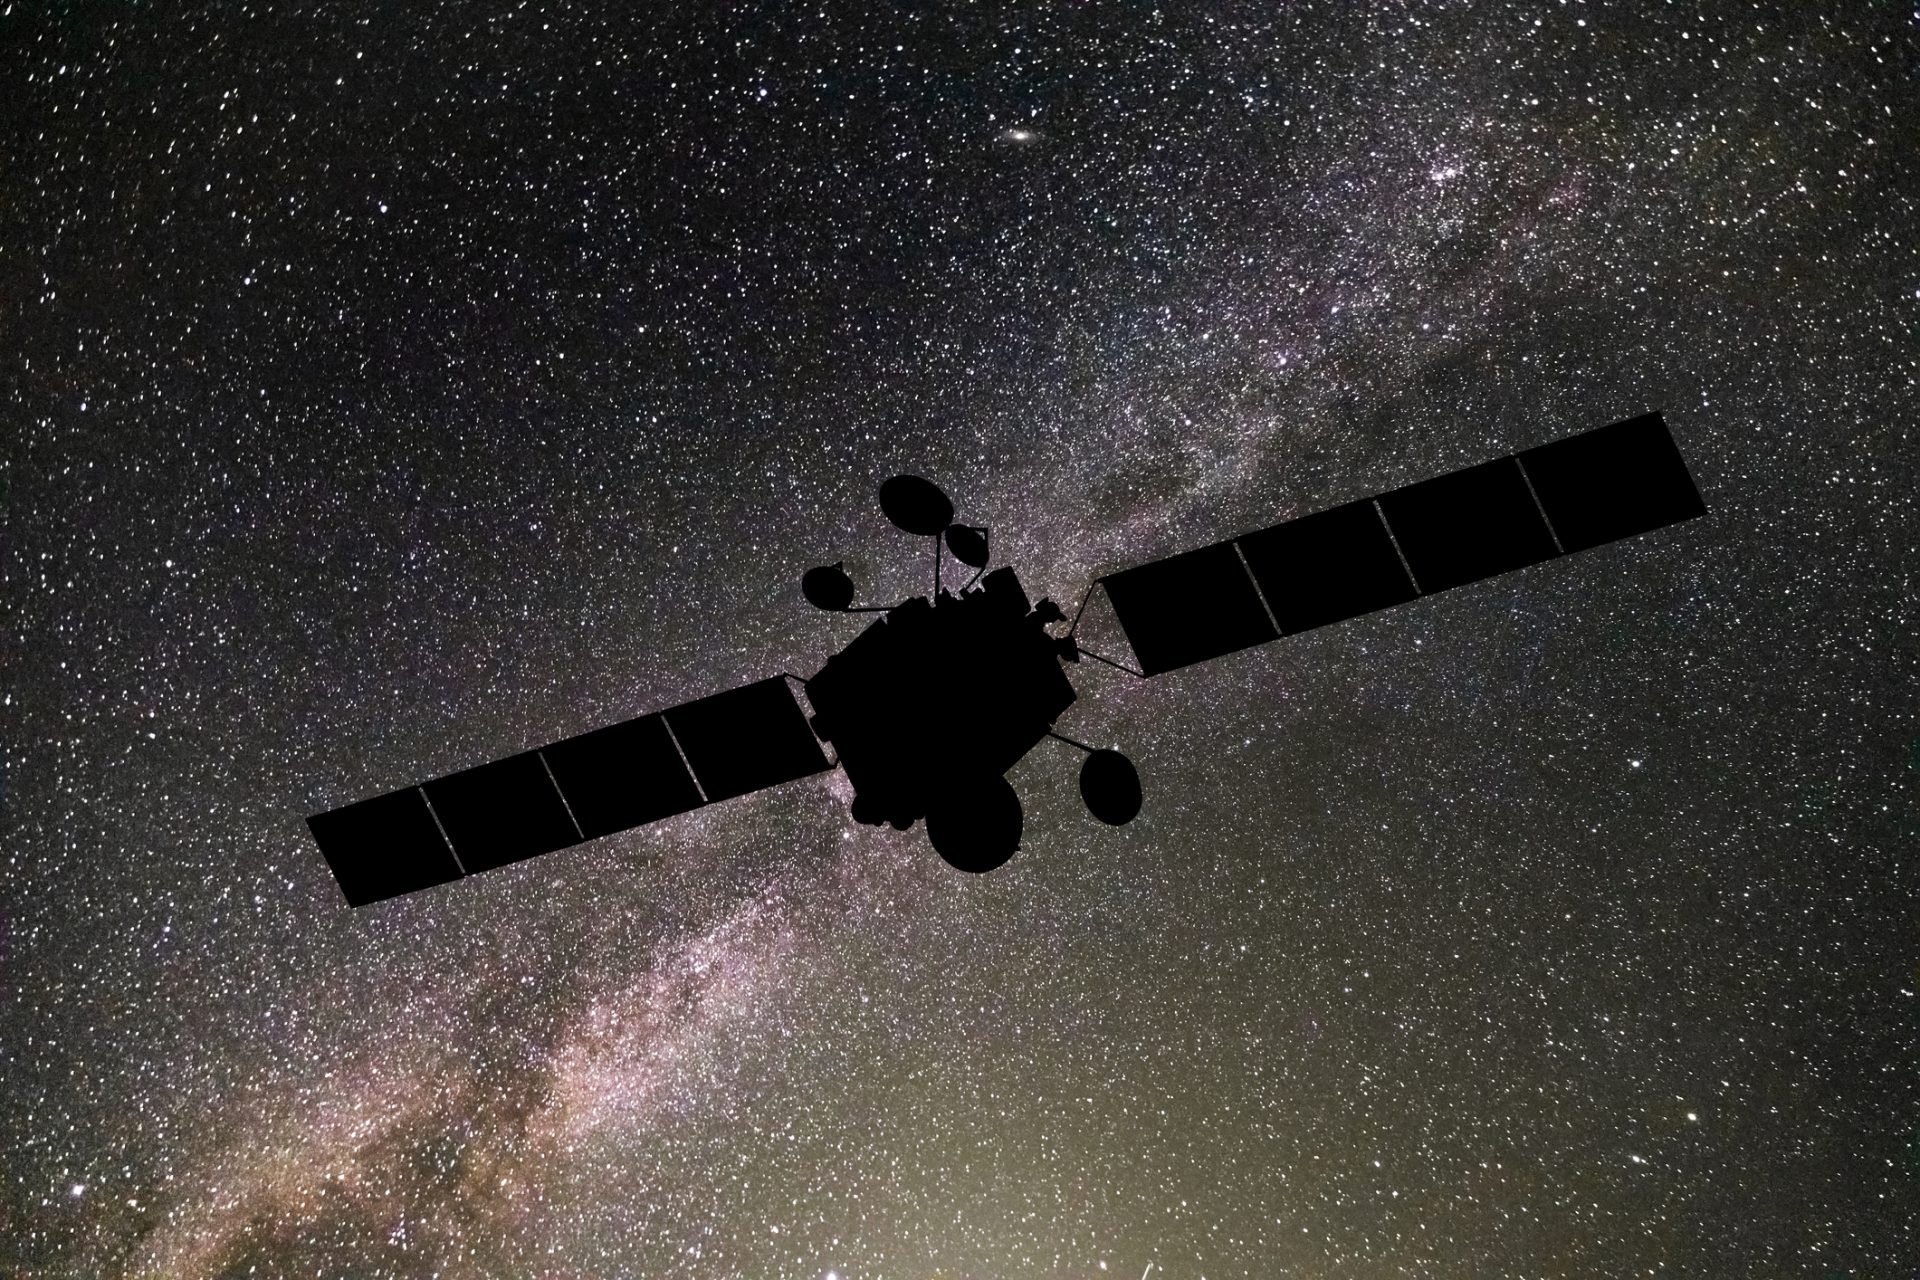 NASA and JAXA plan to send a wooden satellite into space next year